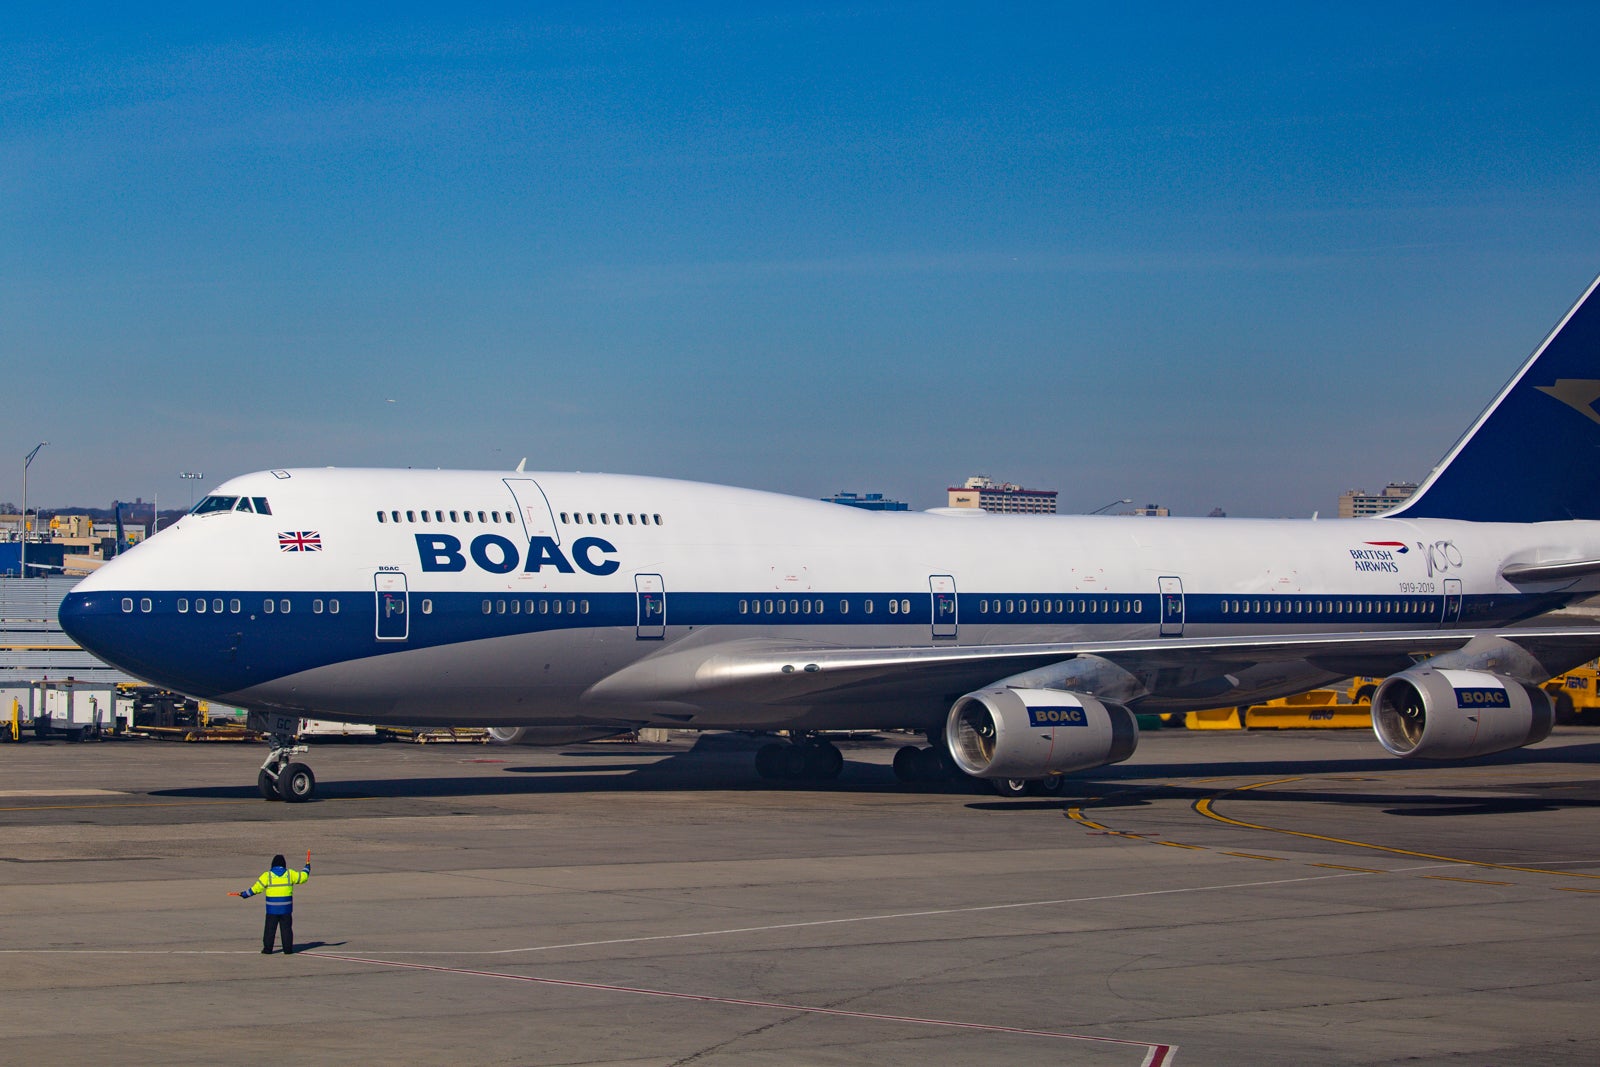 BOAC_British Airways 747 Landing at JFK_BDorsey-8